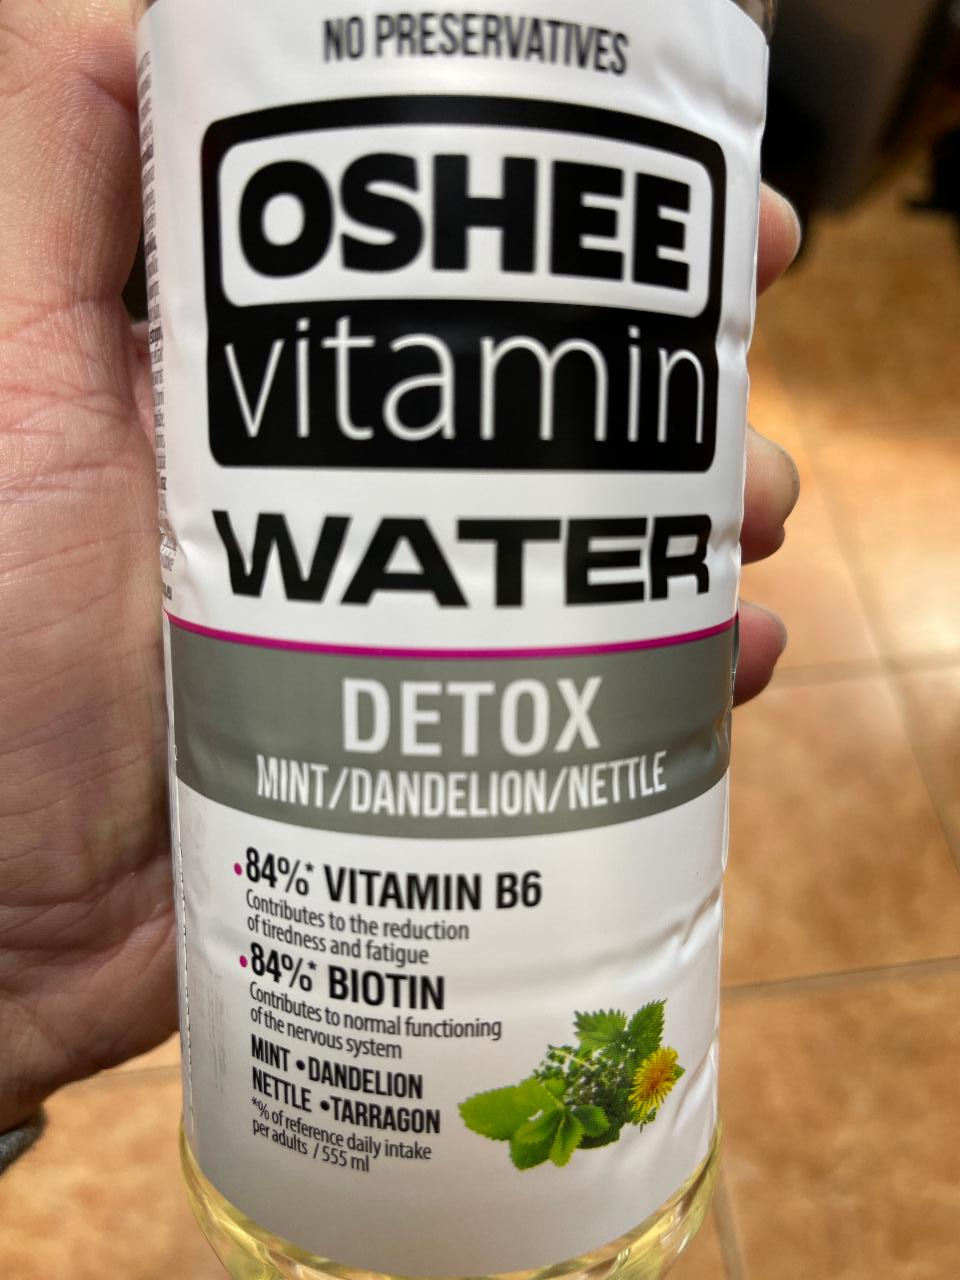 Fotografie - Oshee vitamin water detox mint